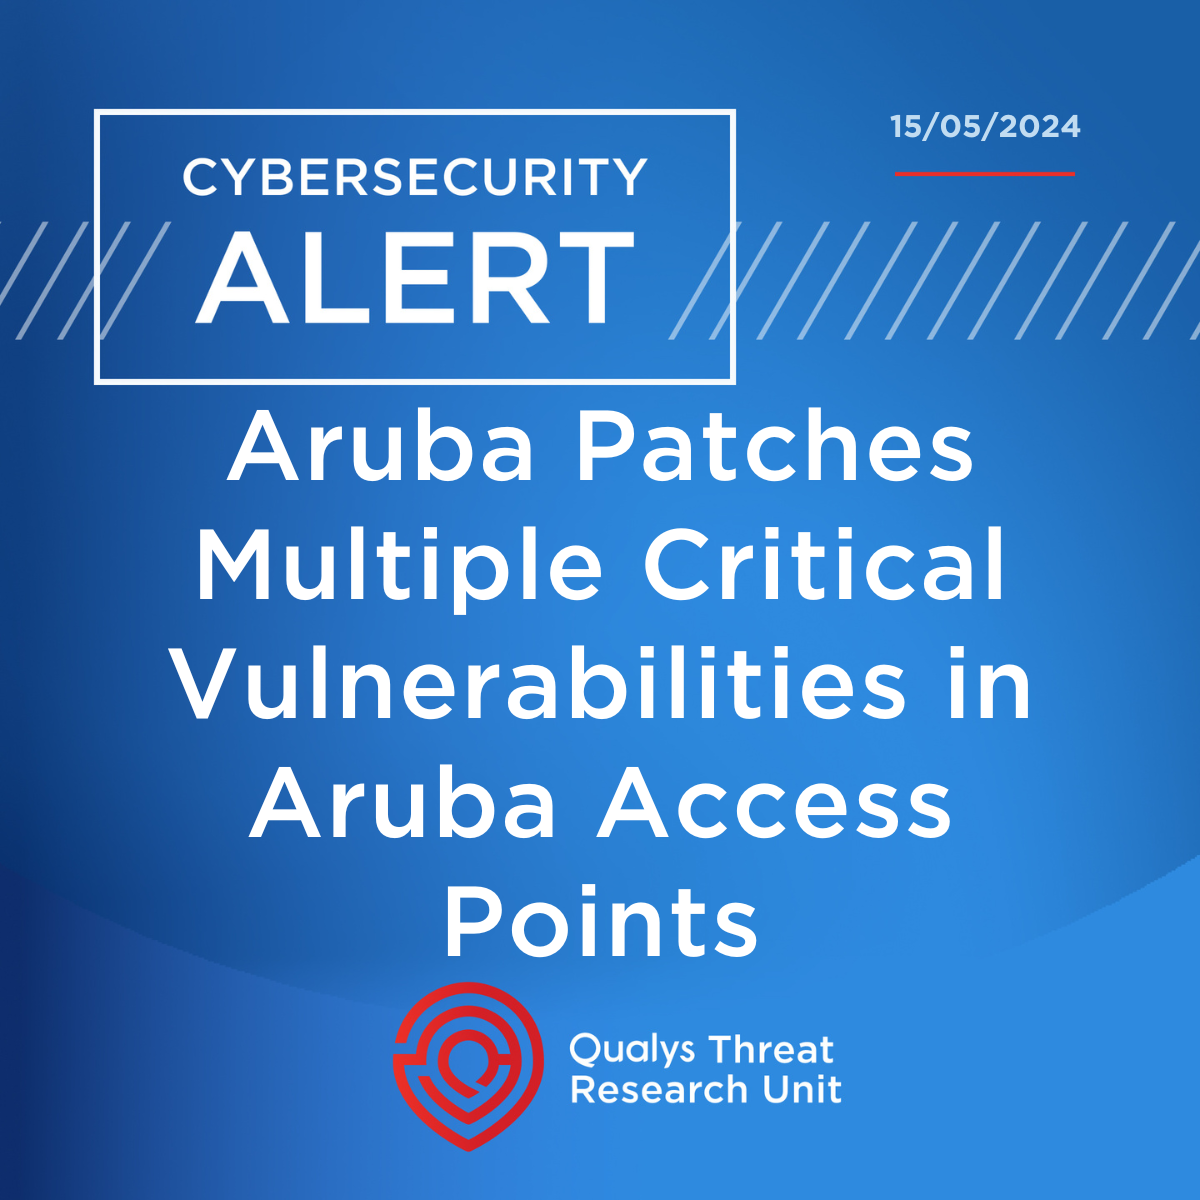 Aruba Patches Multiple Critical Vulnerabilities in Aruba Access Points